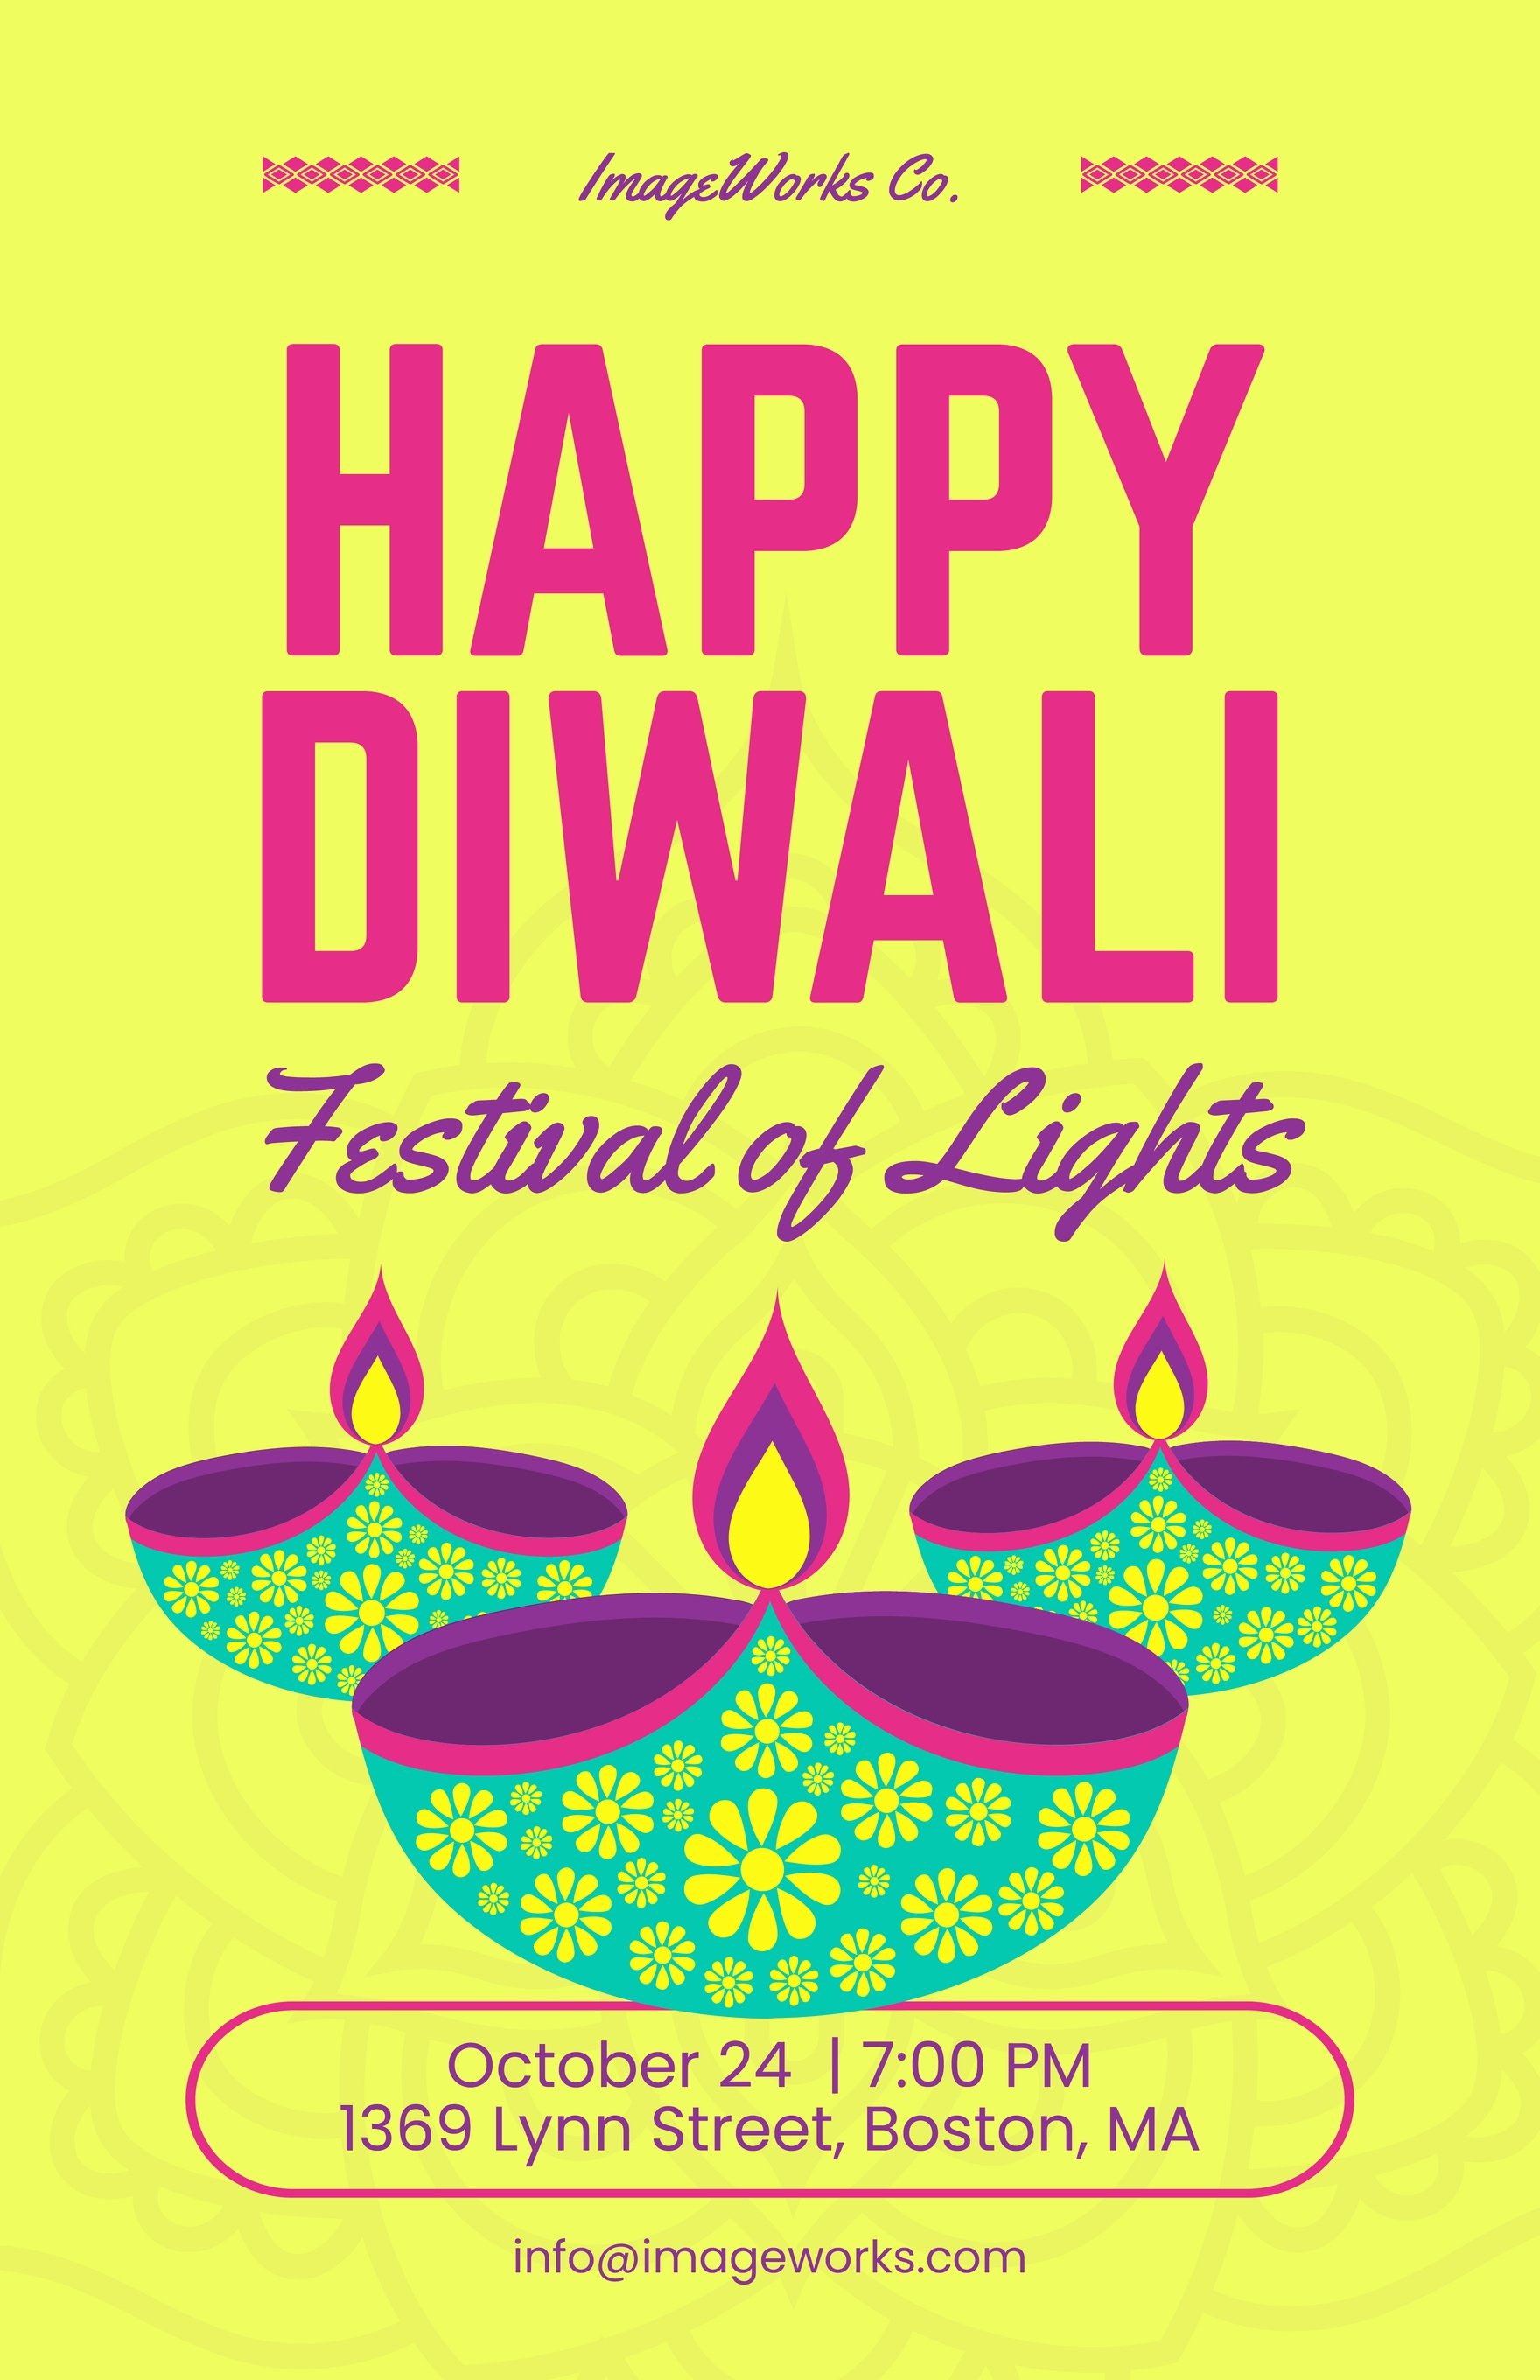 Free Diwali Poster in Word, Google Docs, Illustrator, PSD, Apple Pages, Publisher, EPS, SVG, JPG, PNG